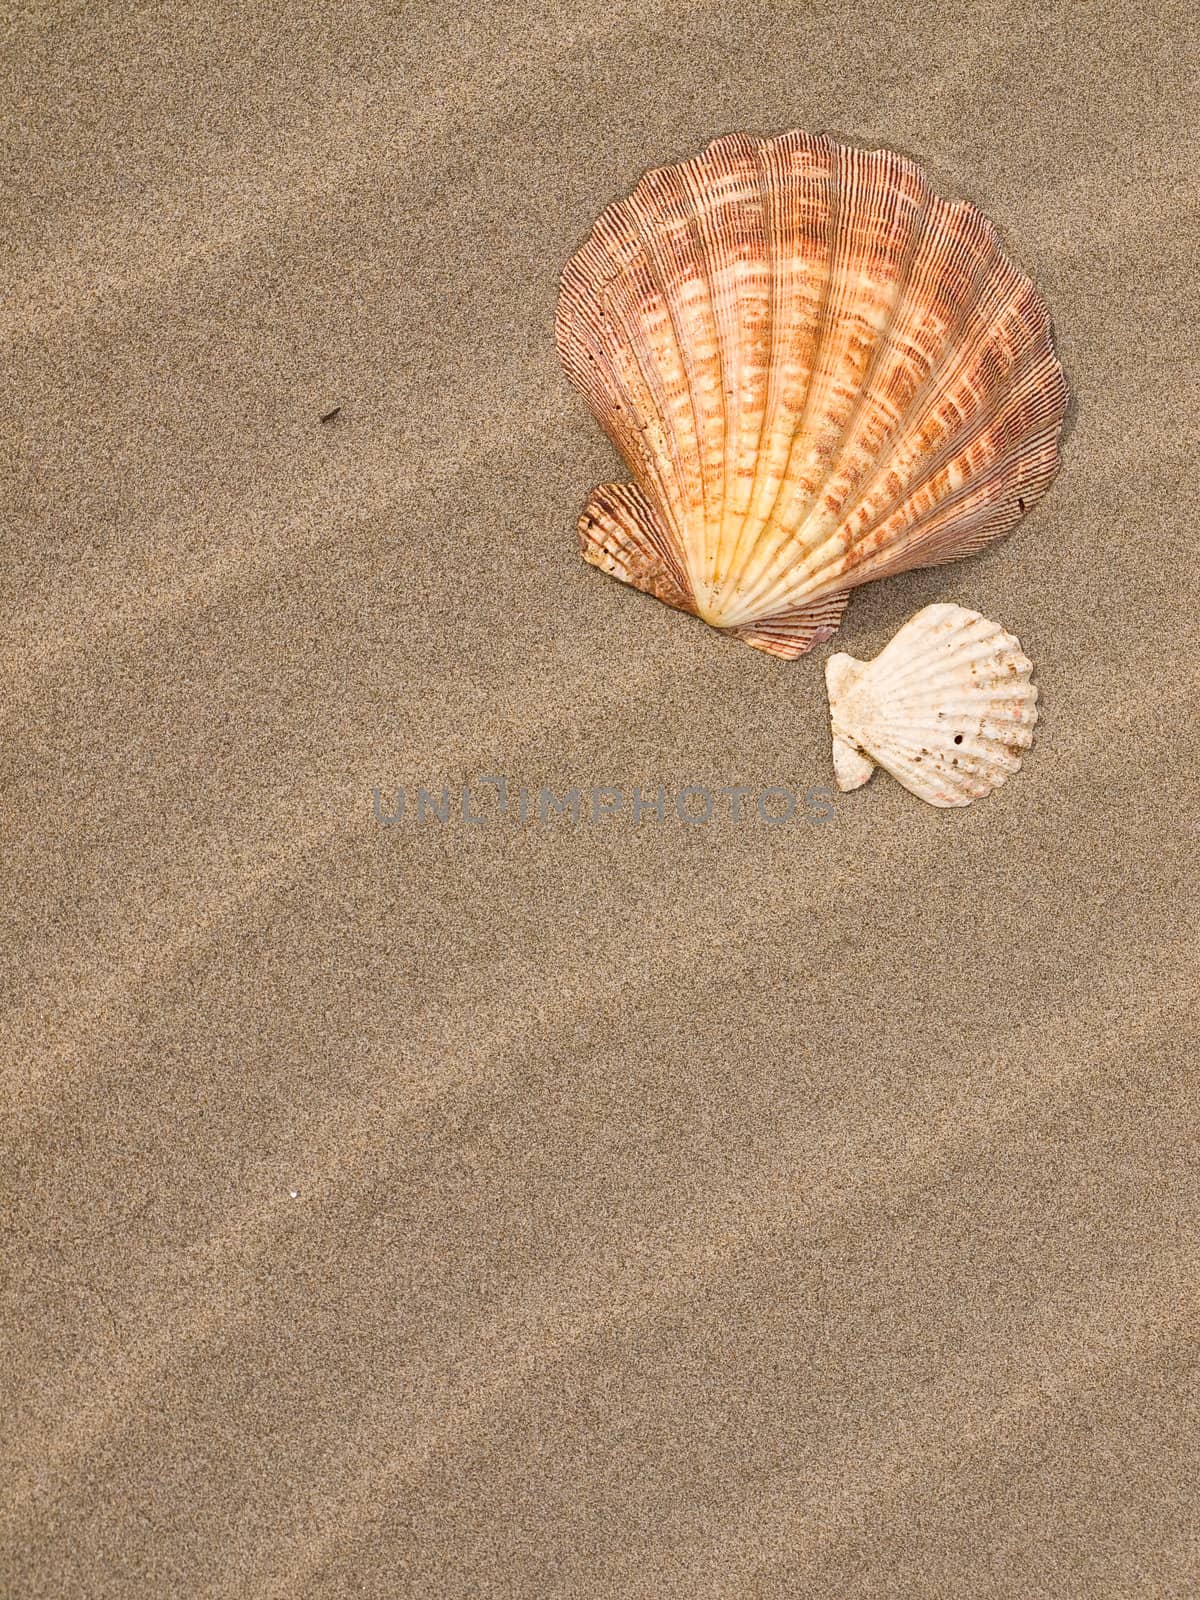 Scallop Shell on a Wind Swept Sandy Beach